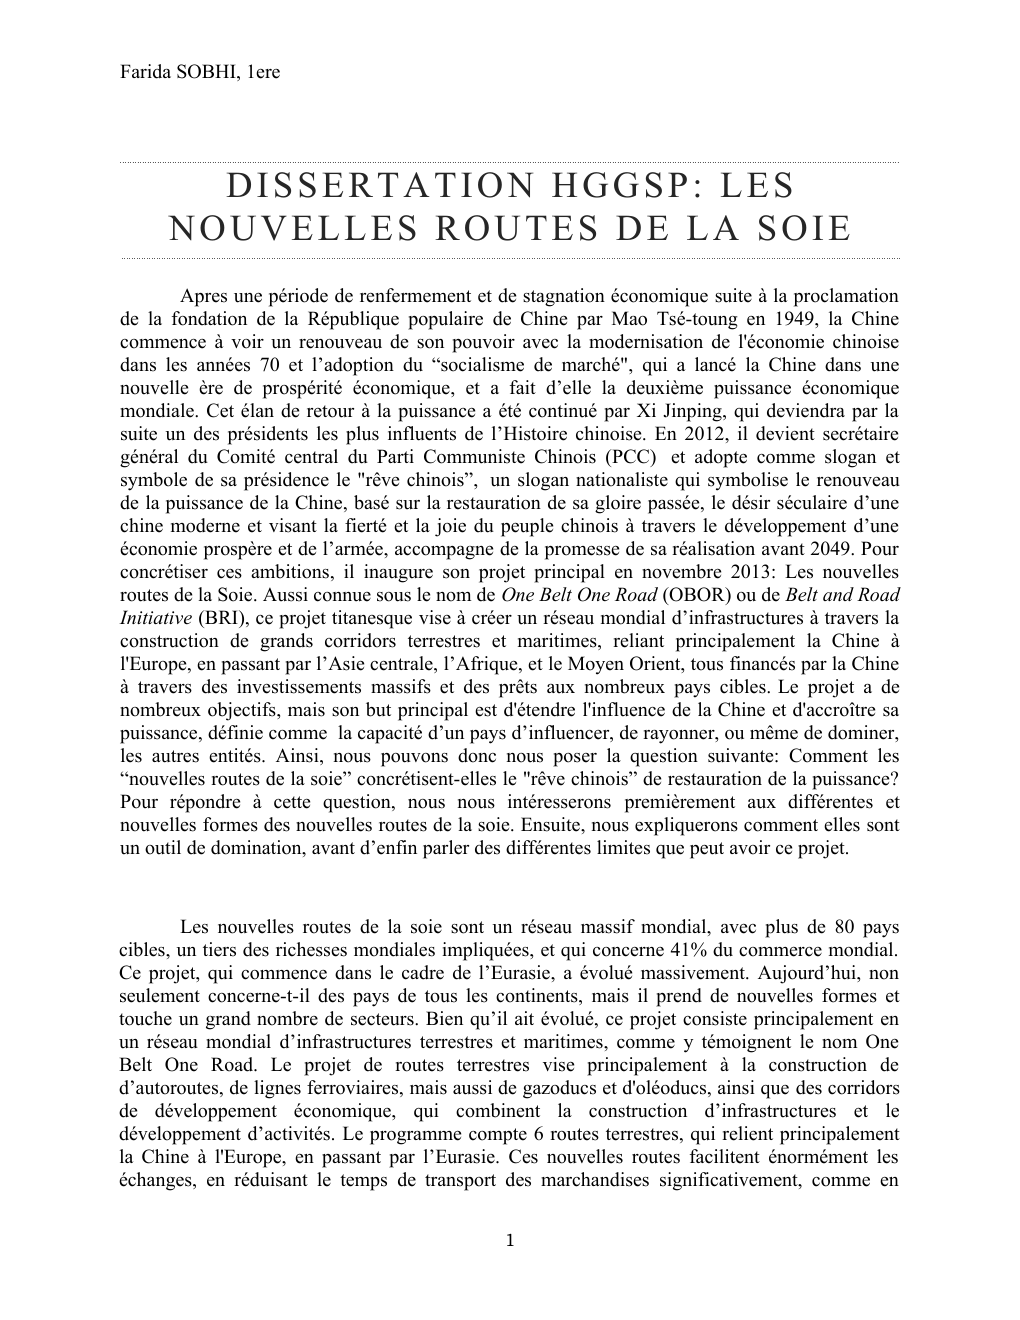 dissertation hggsp 1ere